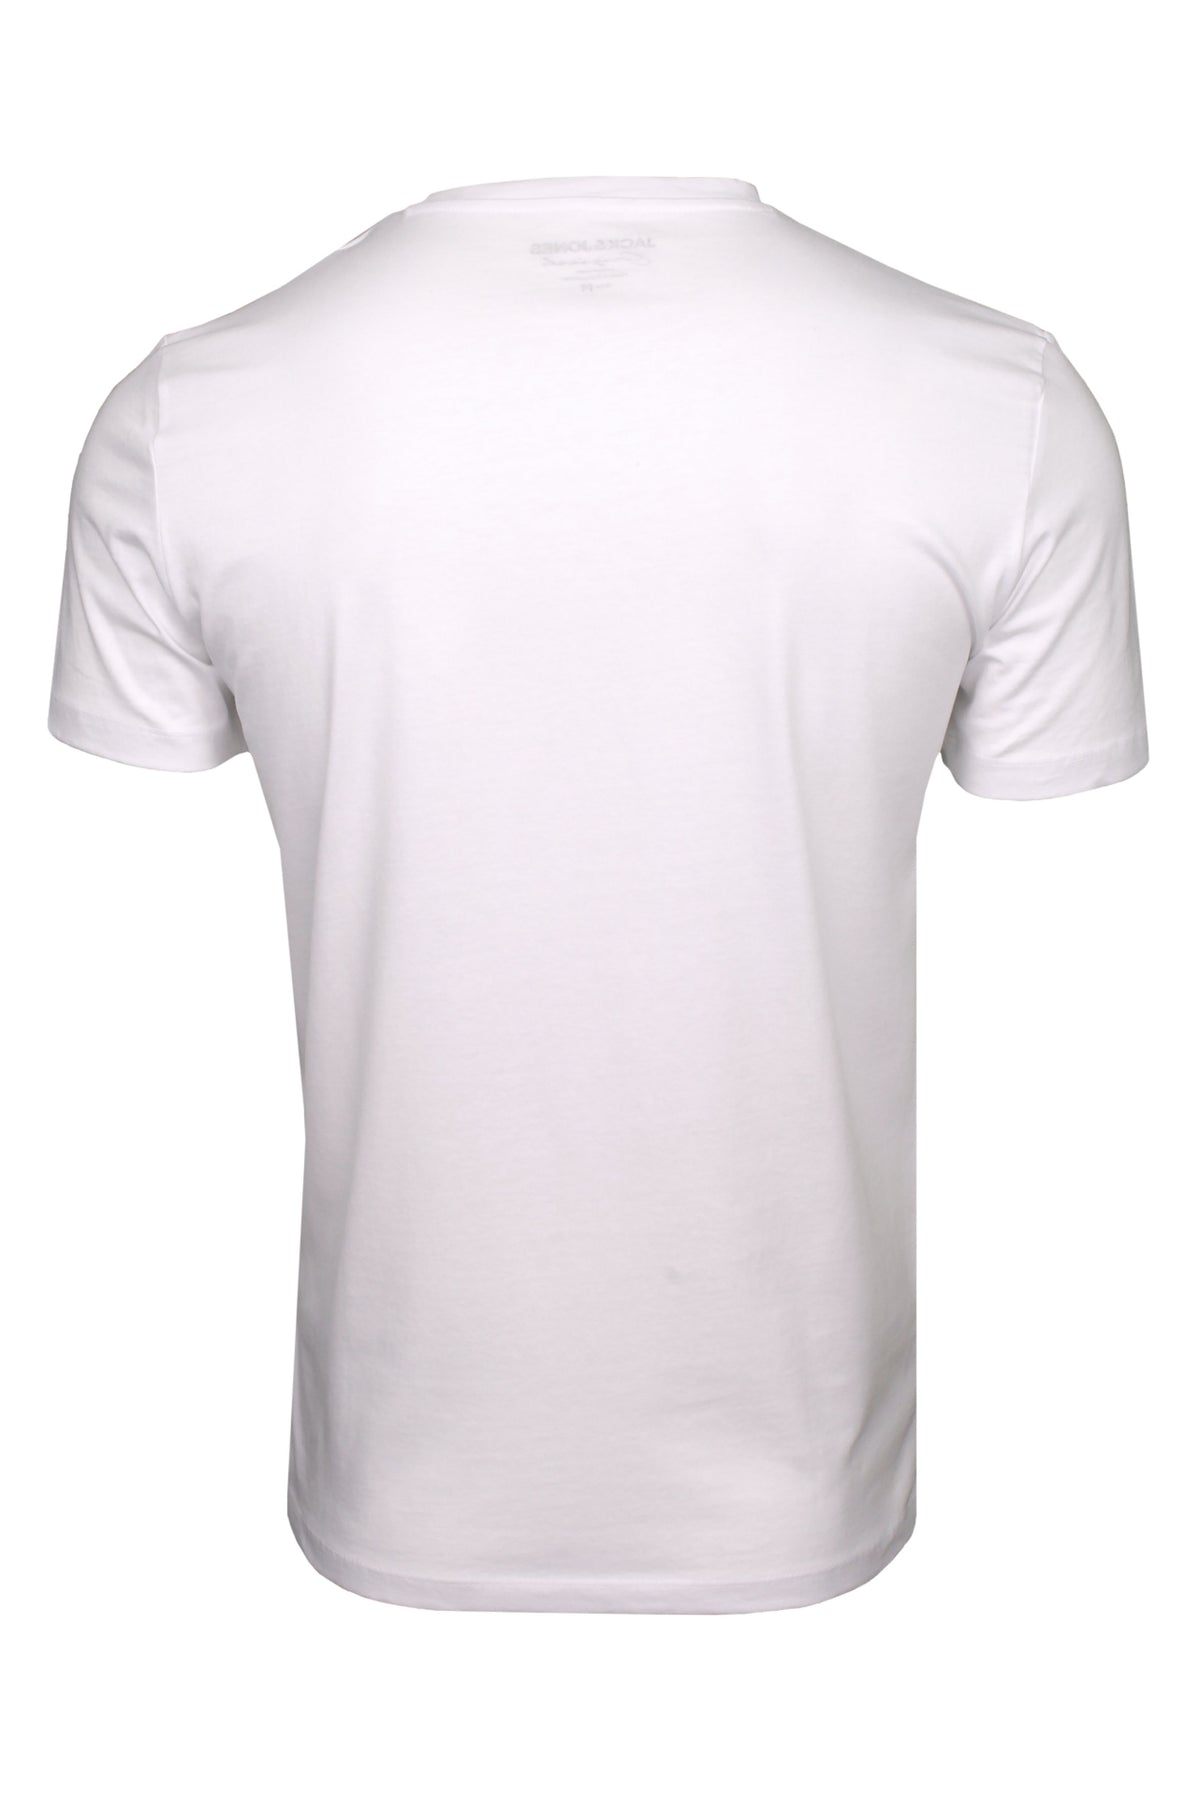 Jack & Jones Mens T-Shirt 'Jor Penny Tee', 03, 12207694, Bright White